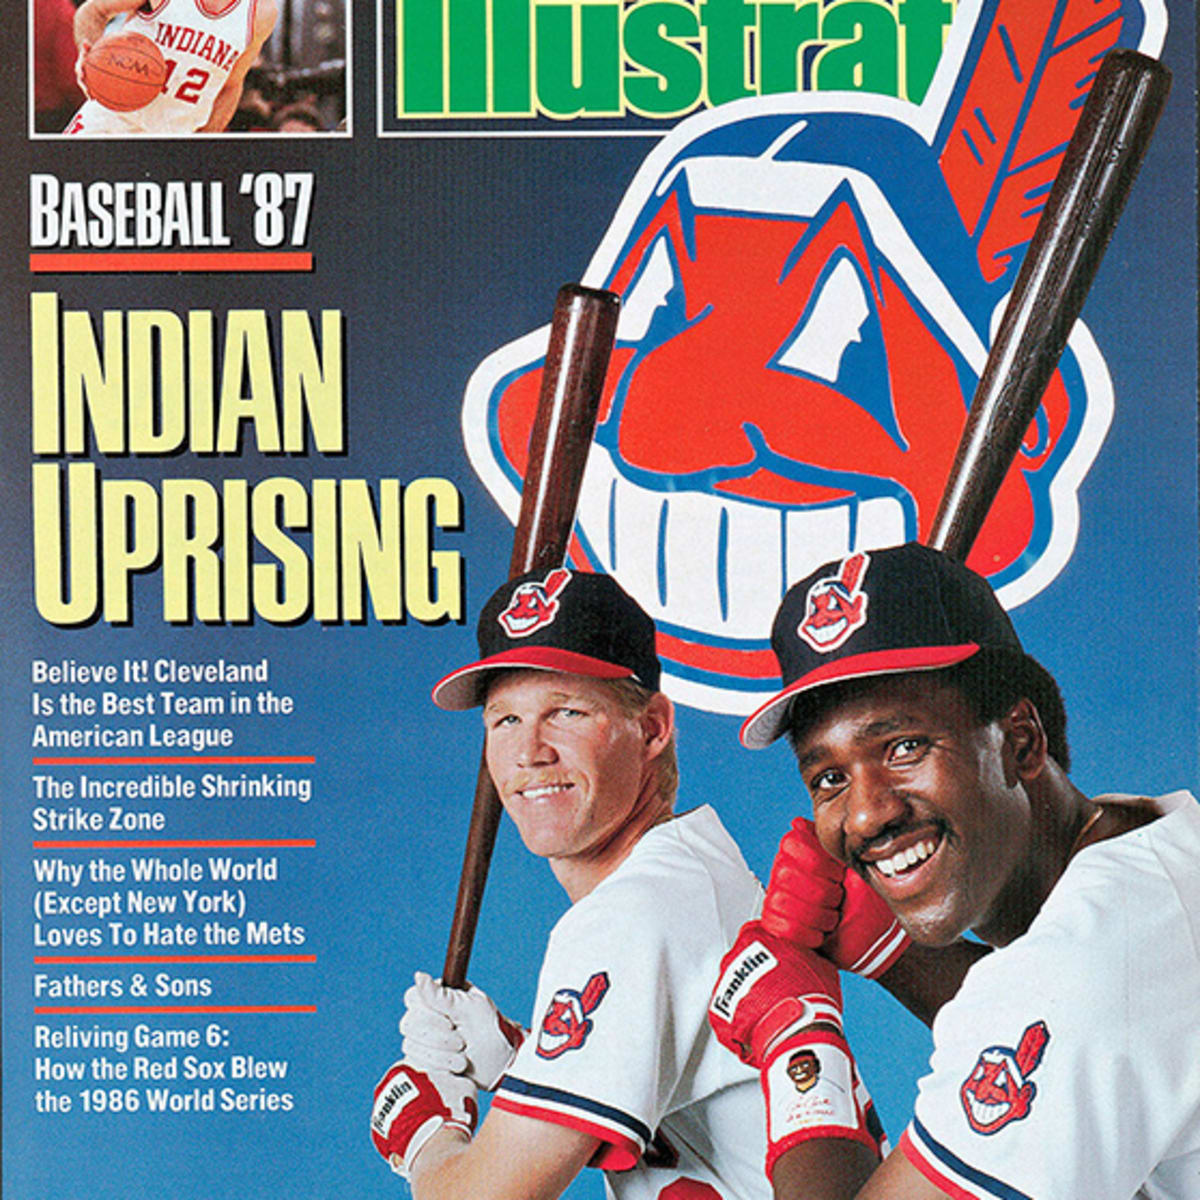 New York Mets Ron Darling MLB BASEBALL 1986 Sports Illustrated Magazine!